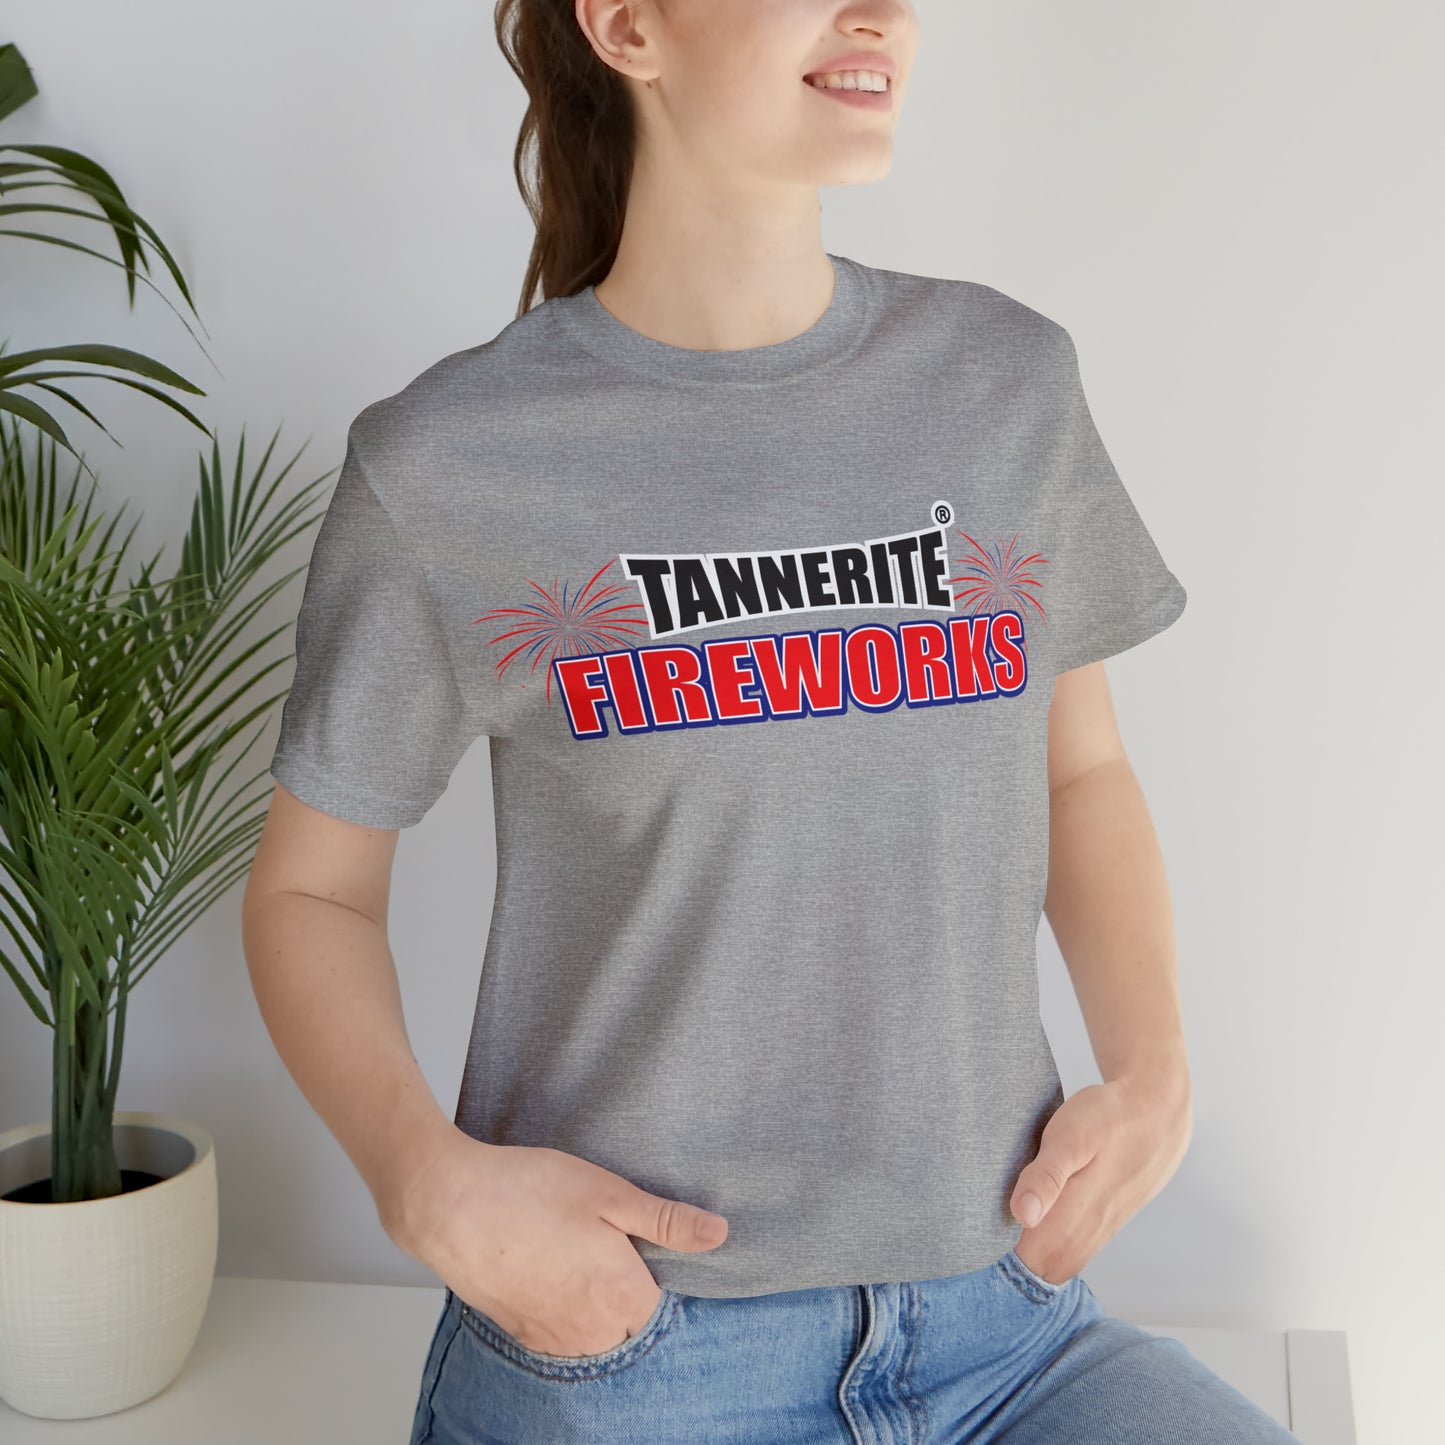 Tannerite® Fireworks Tshirt - Basic